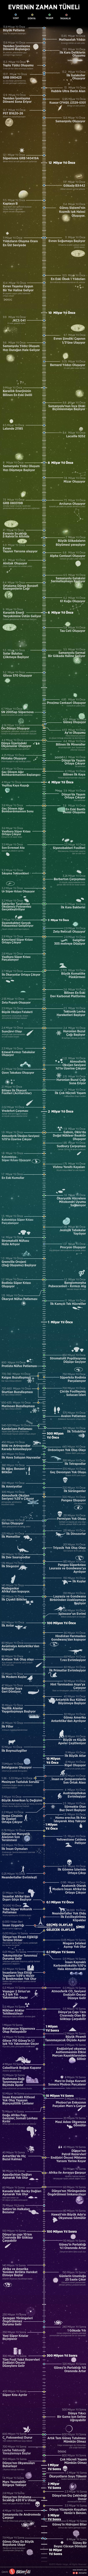 evrenin-zaman-tuneli-infografik-bilimfilicom